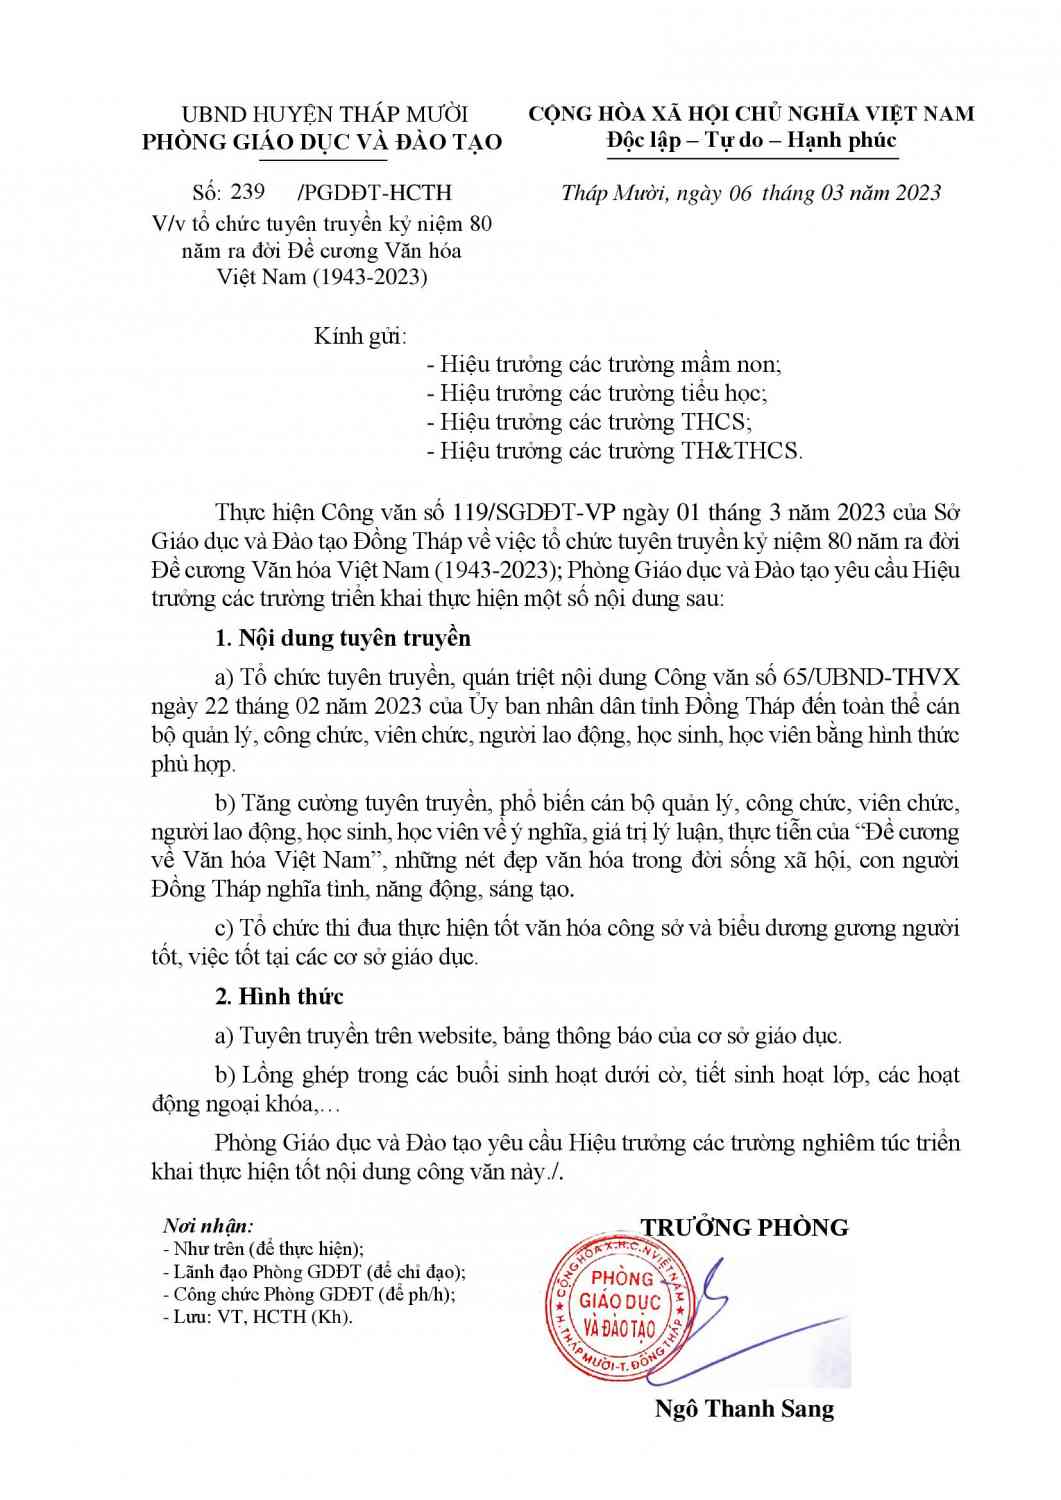 239-PGD - CV-TO CHUC KY NIEM 80 NAM DE CUONG VAN HOA VN (06-03-2023)